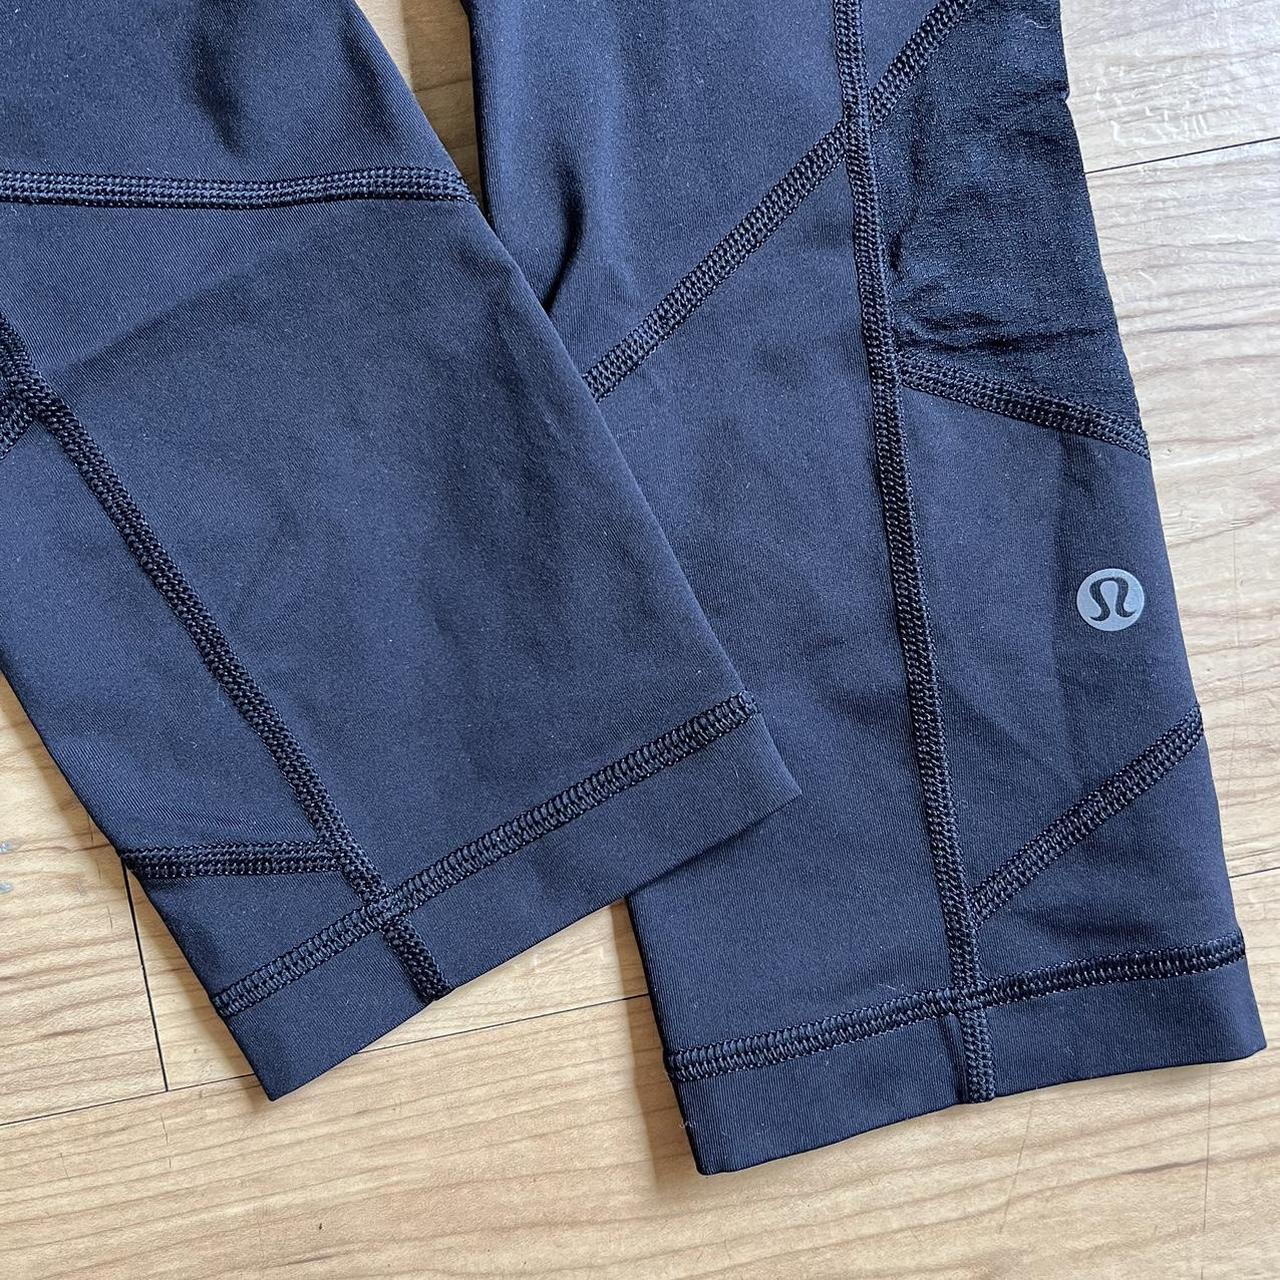 Lululemon Leggings Black Sport Pockets Side and Zip Back Size 4 Inseam 23.5”